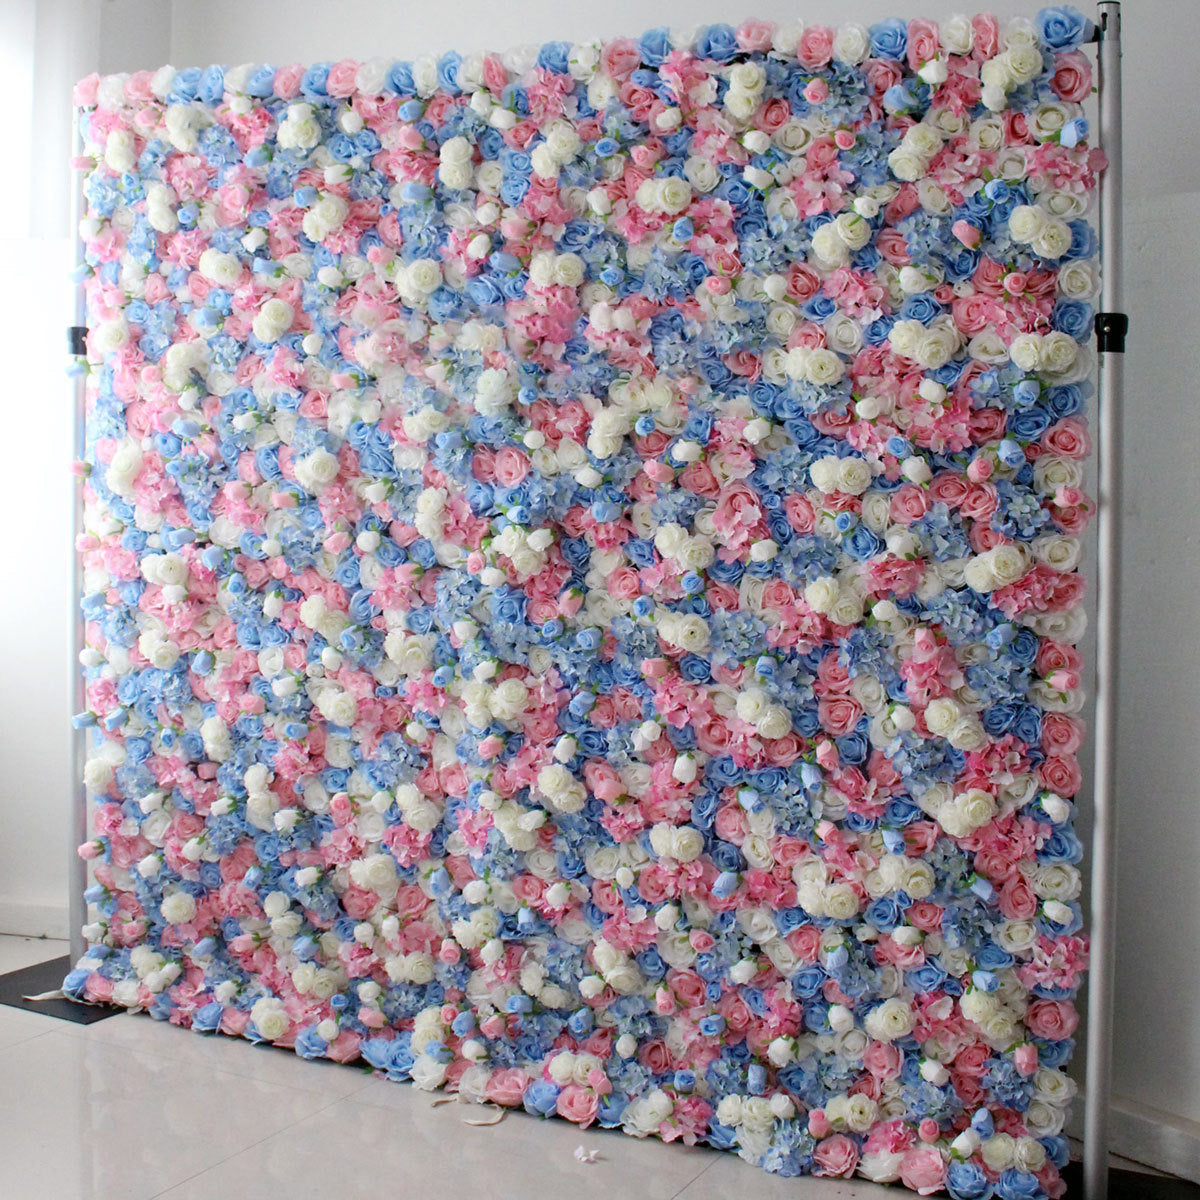 3D Artificial Flower Wall Arrangement Wedding Party Birthday Backdrop Decor HQ1180